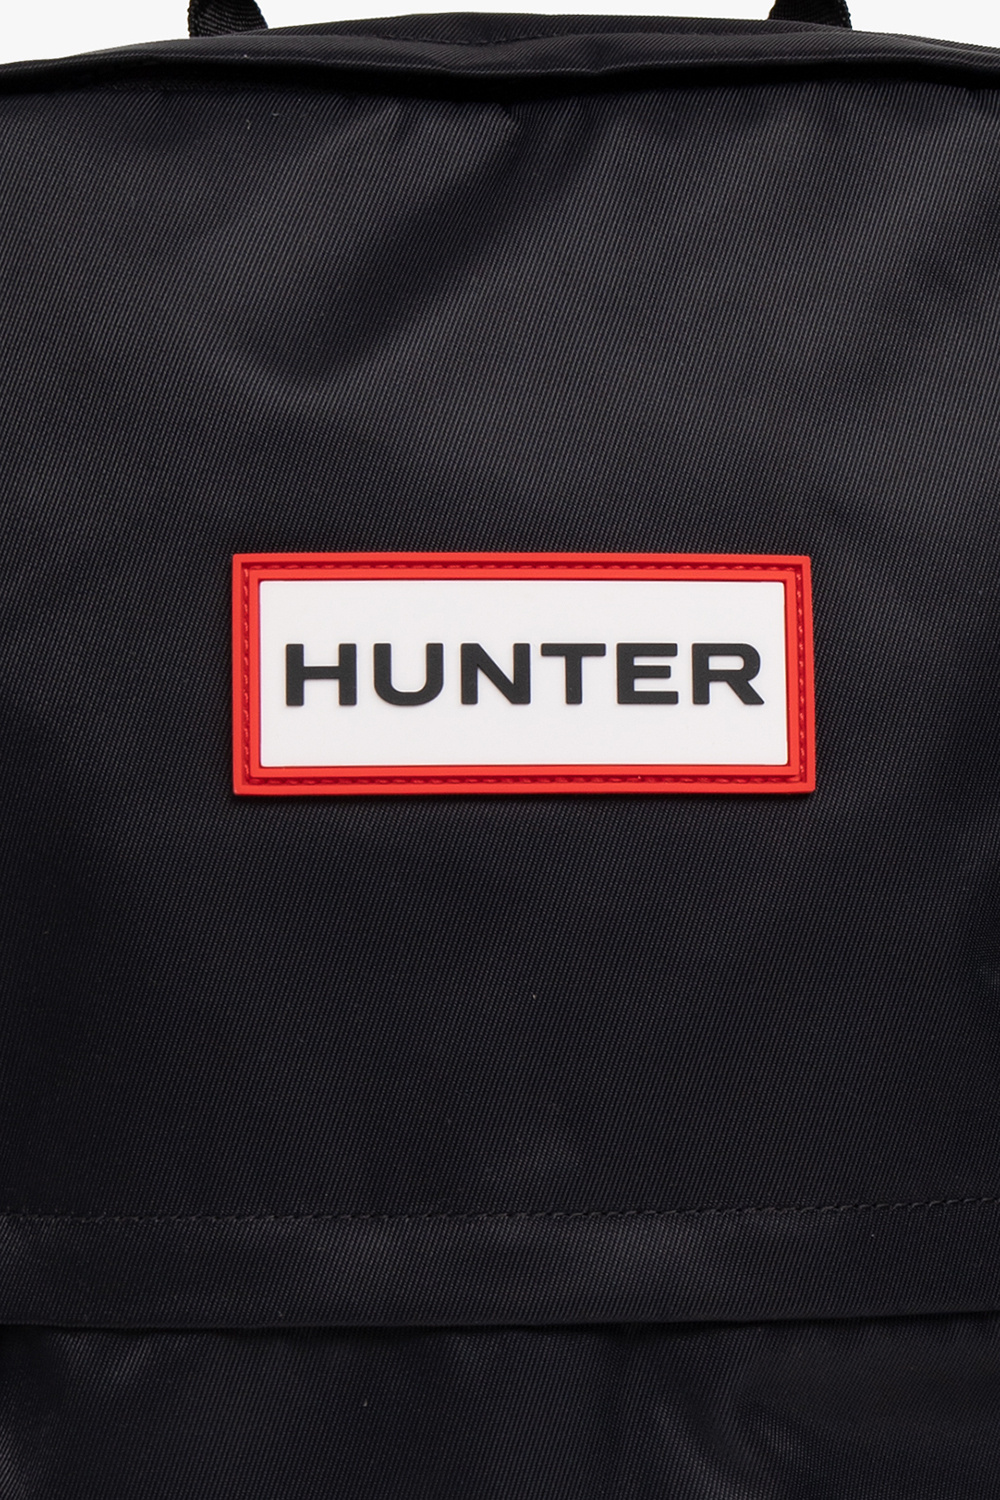 Hunter Pierre Hardy Planet Cube Box shoulder bag